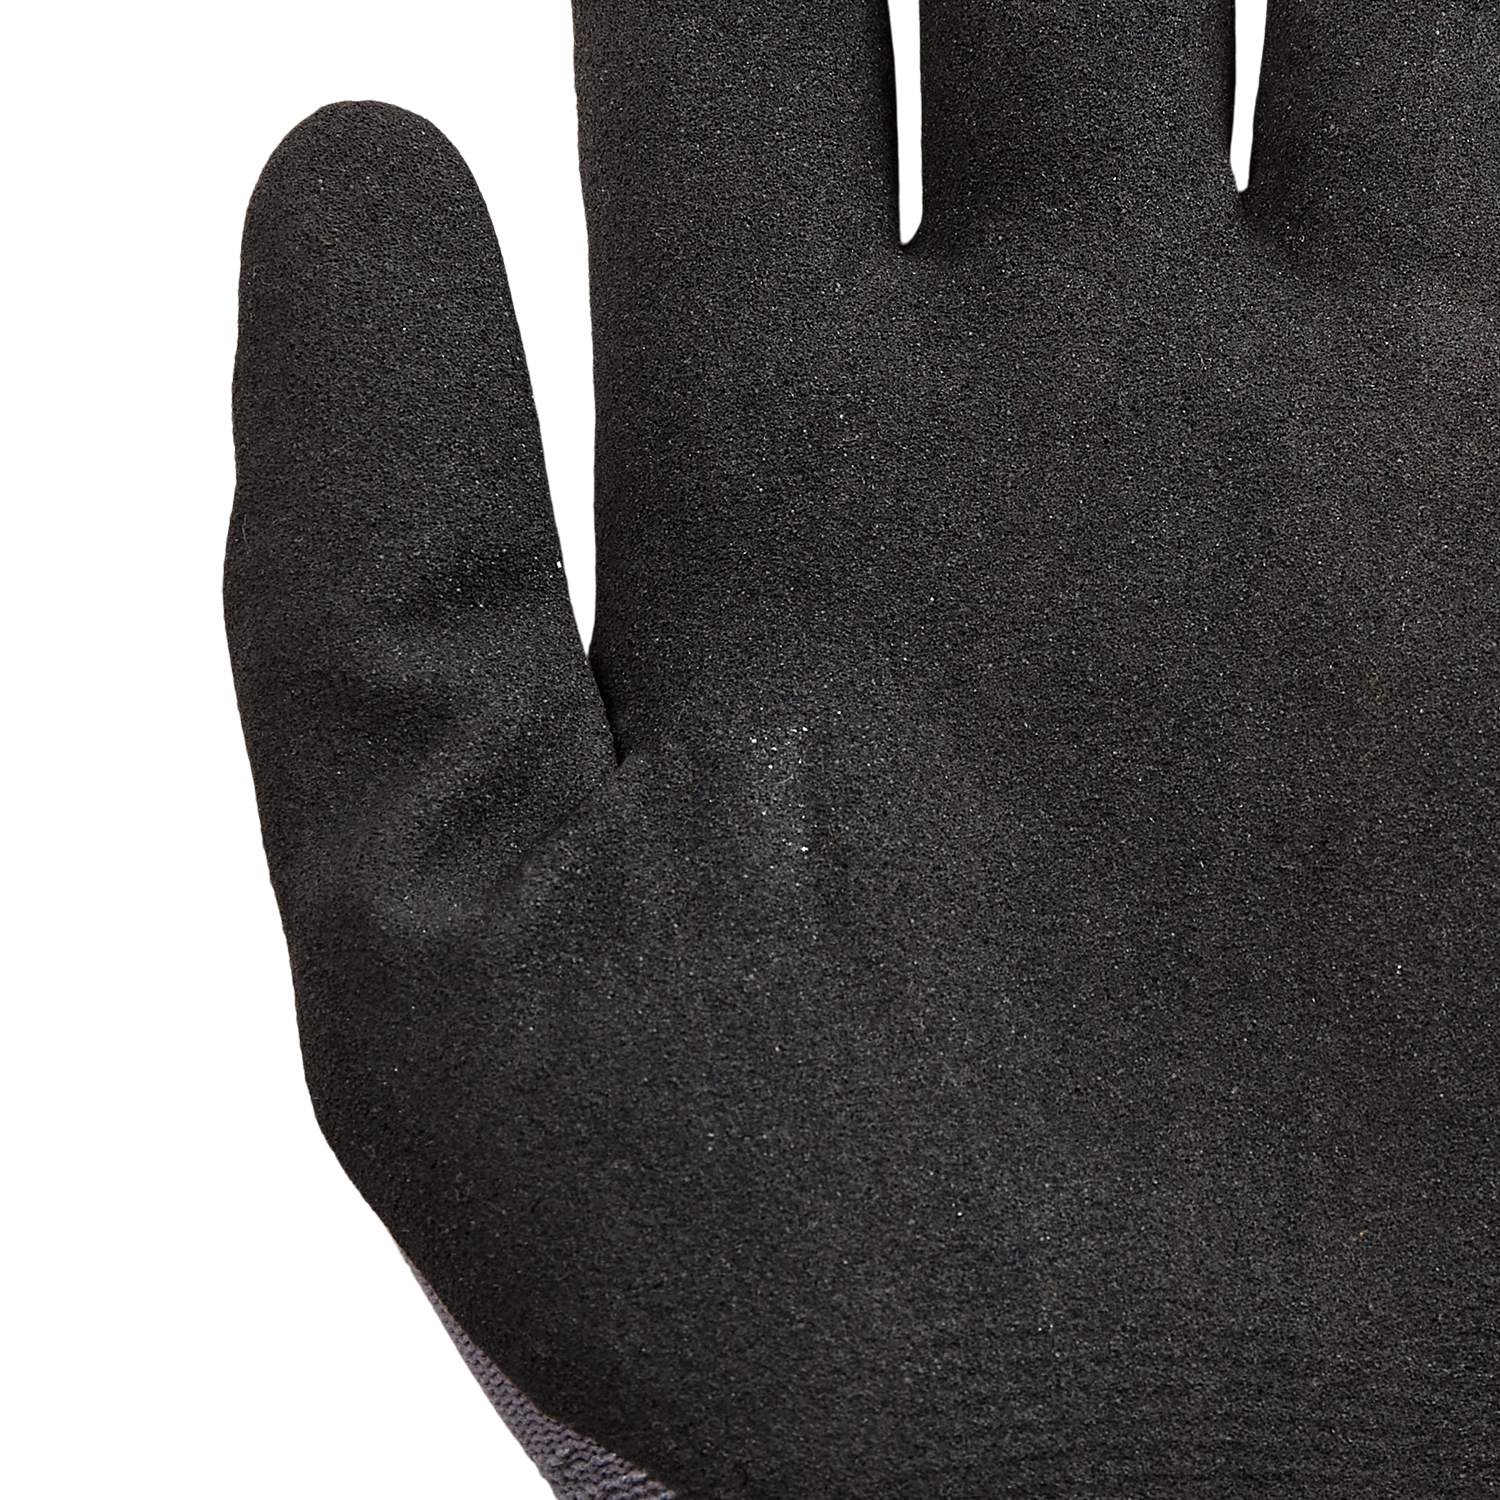 NORSE Flex Original assembly gloves size 9